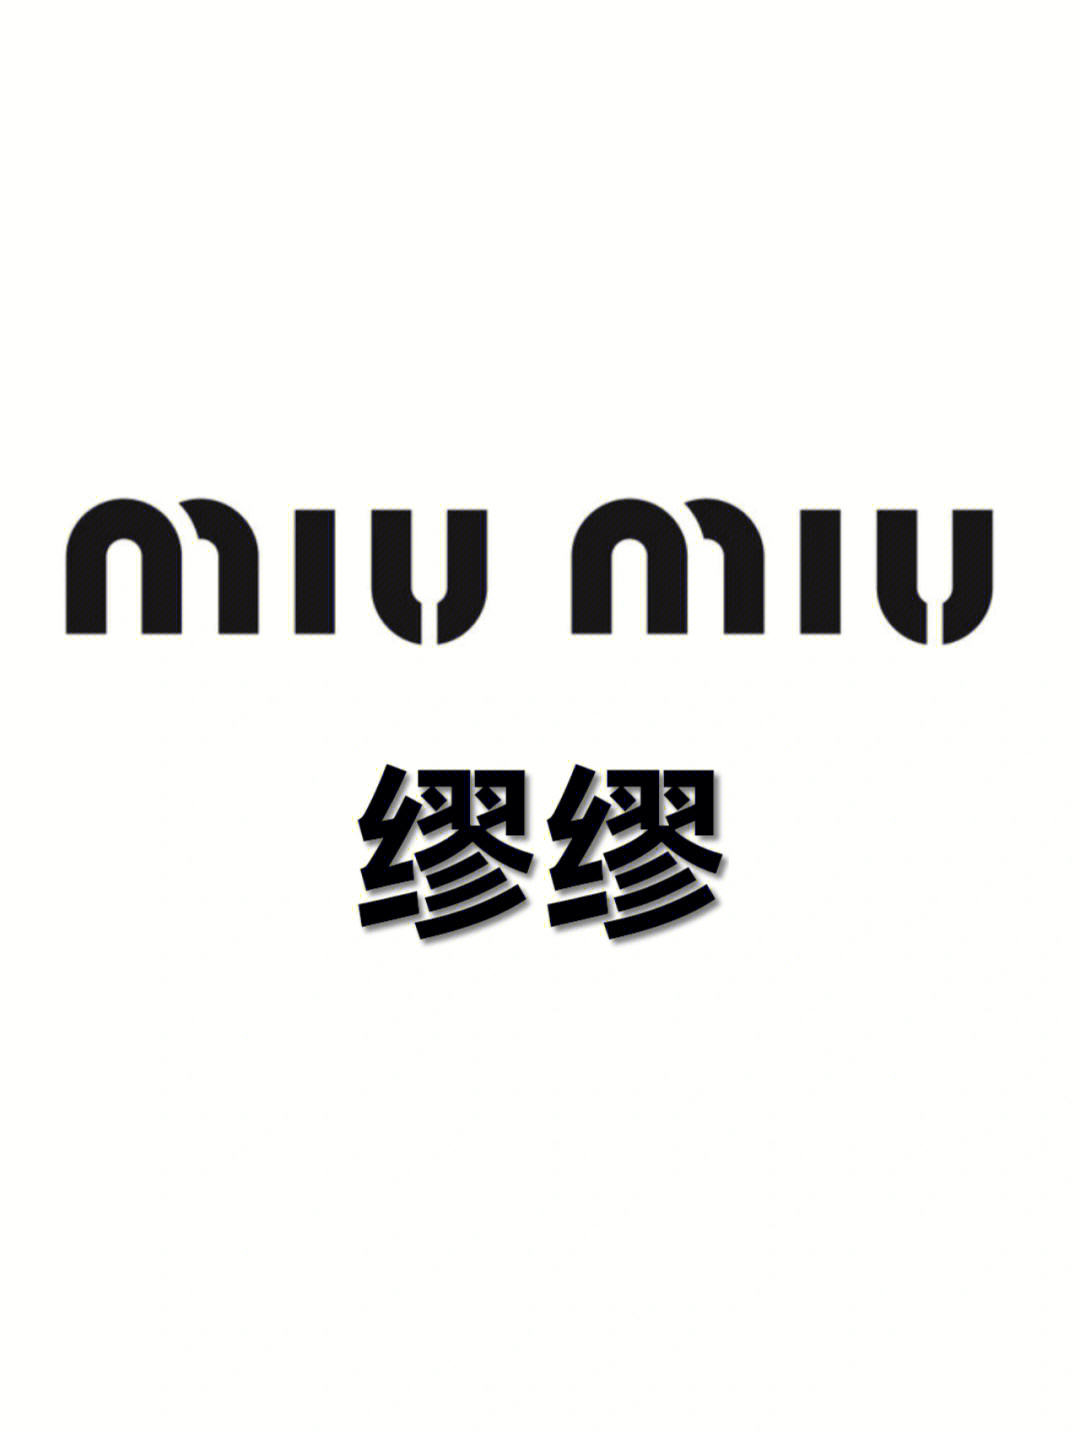 miumiu(中文名缪缪)是prada旗下的gao端轻she品牌,也是prada旗下主要